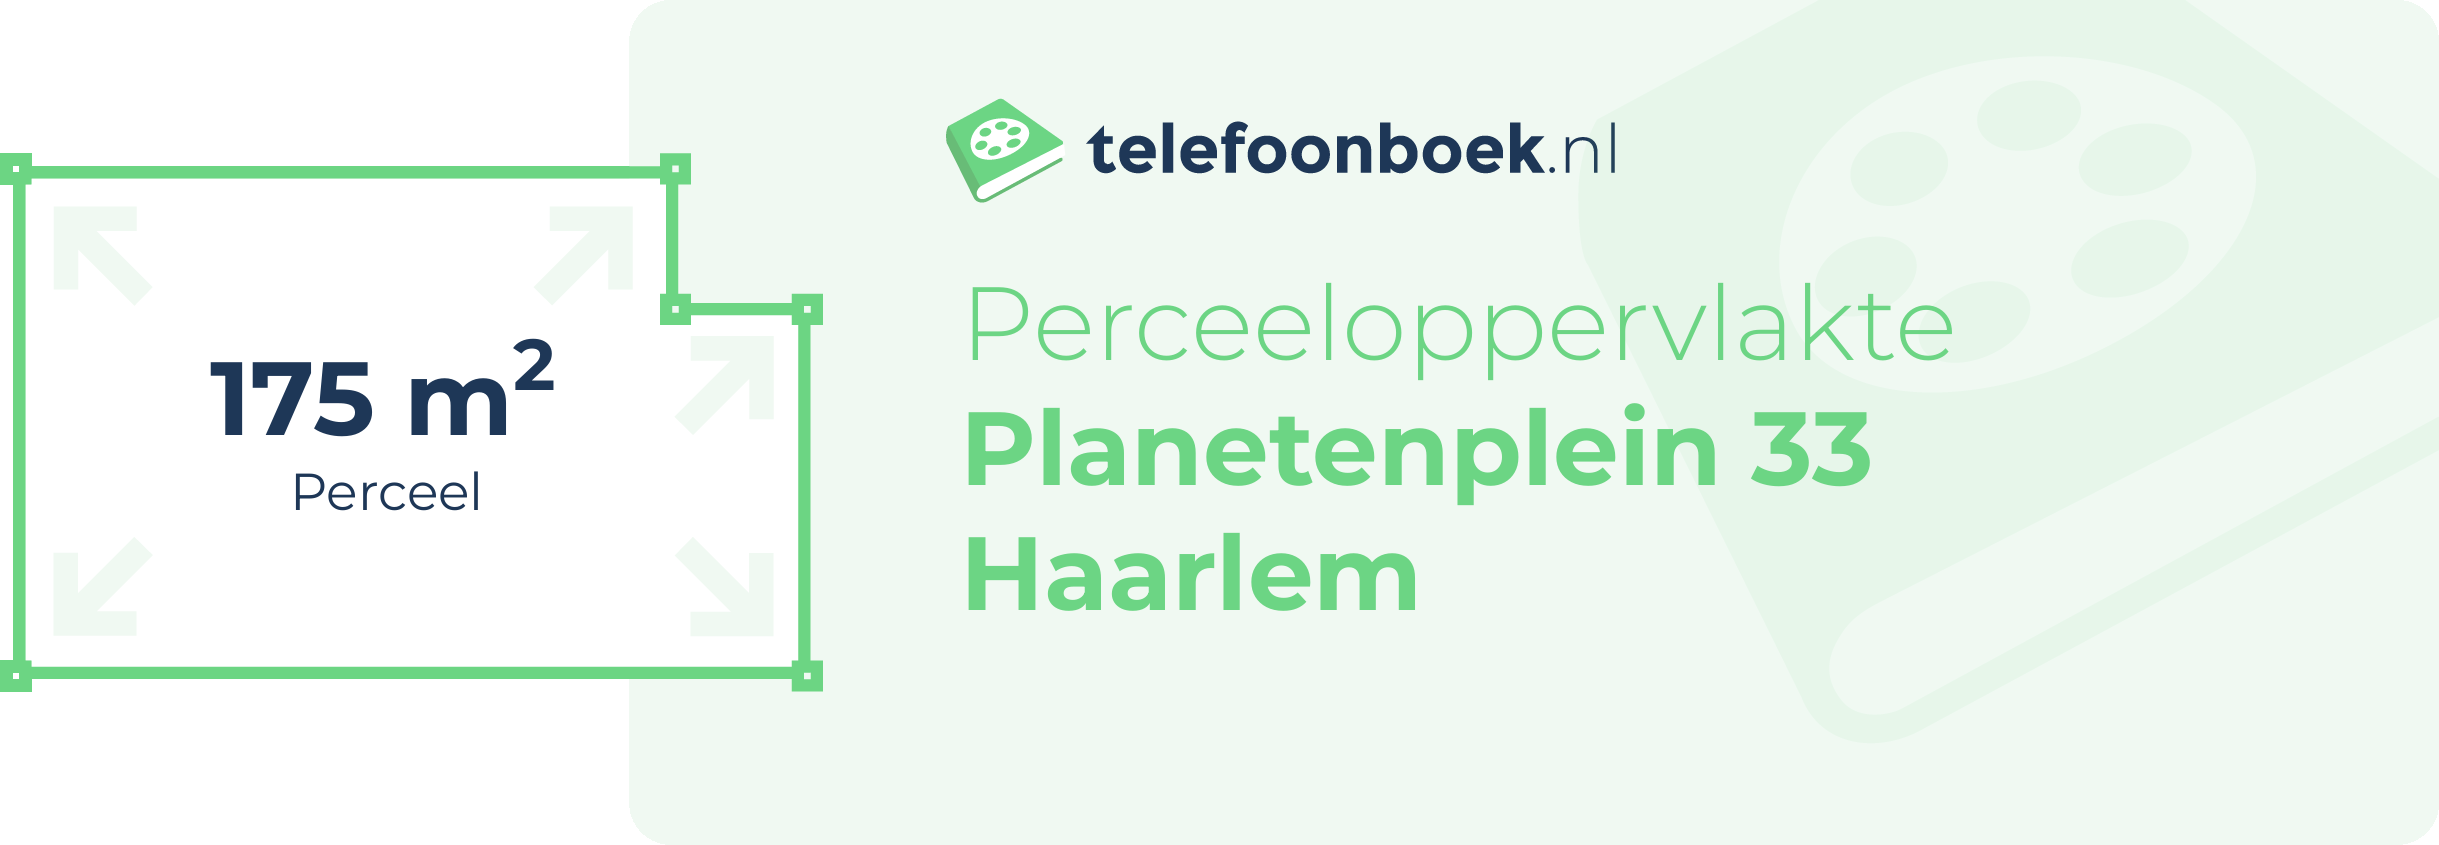 Perceeloppervlakte Planetenplein 33 Haarlem